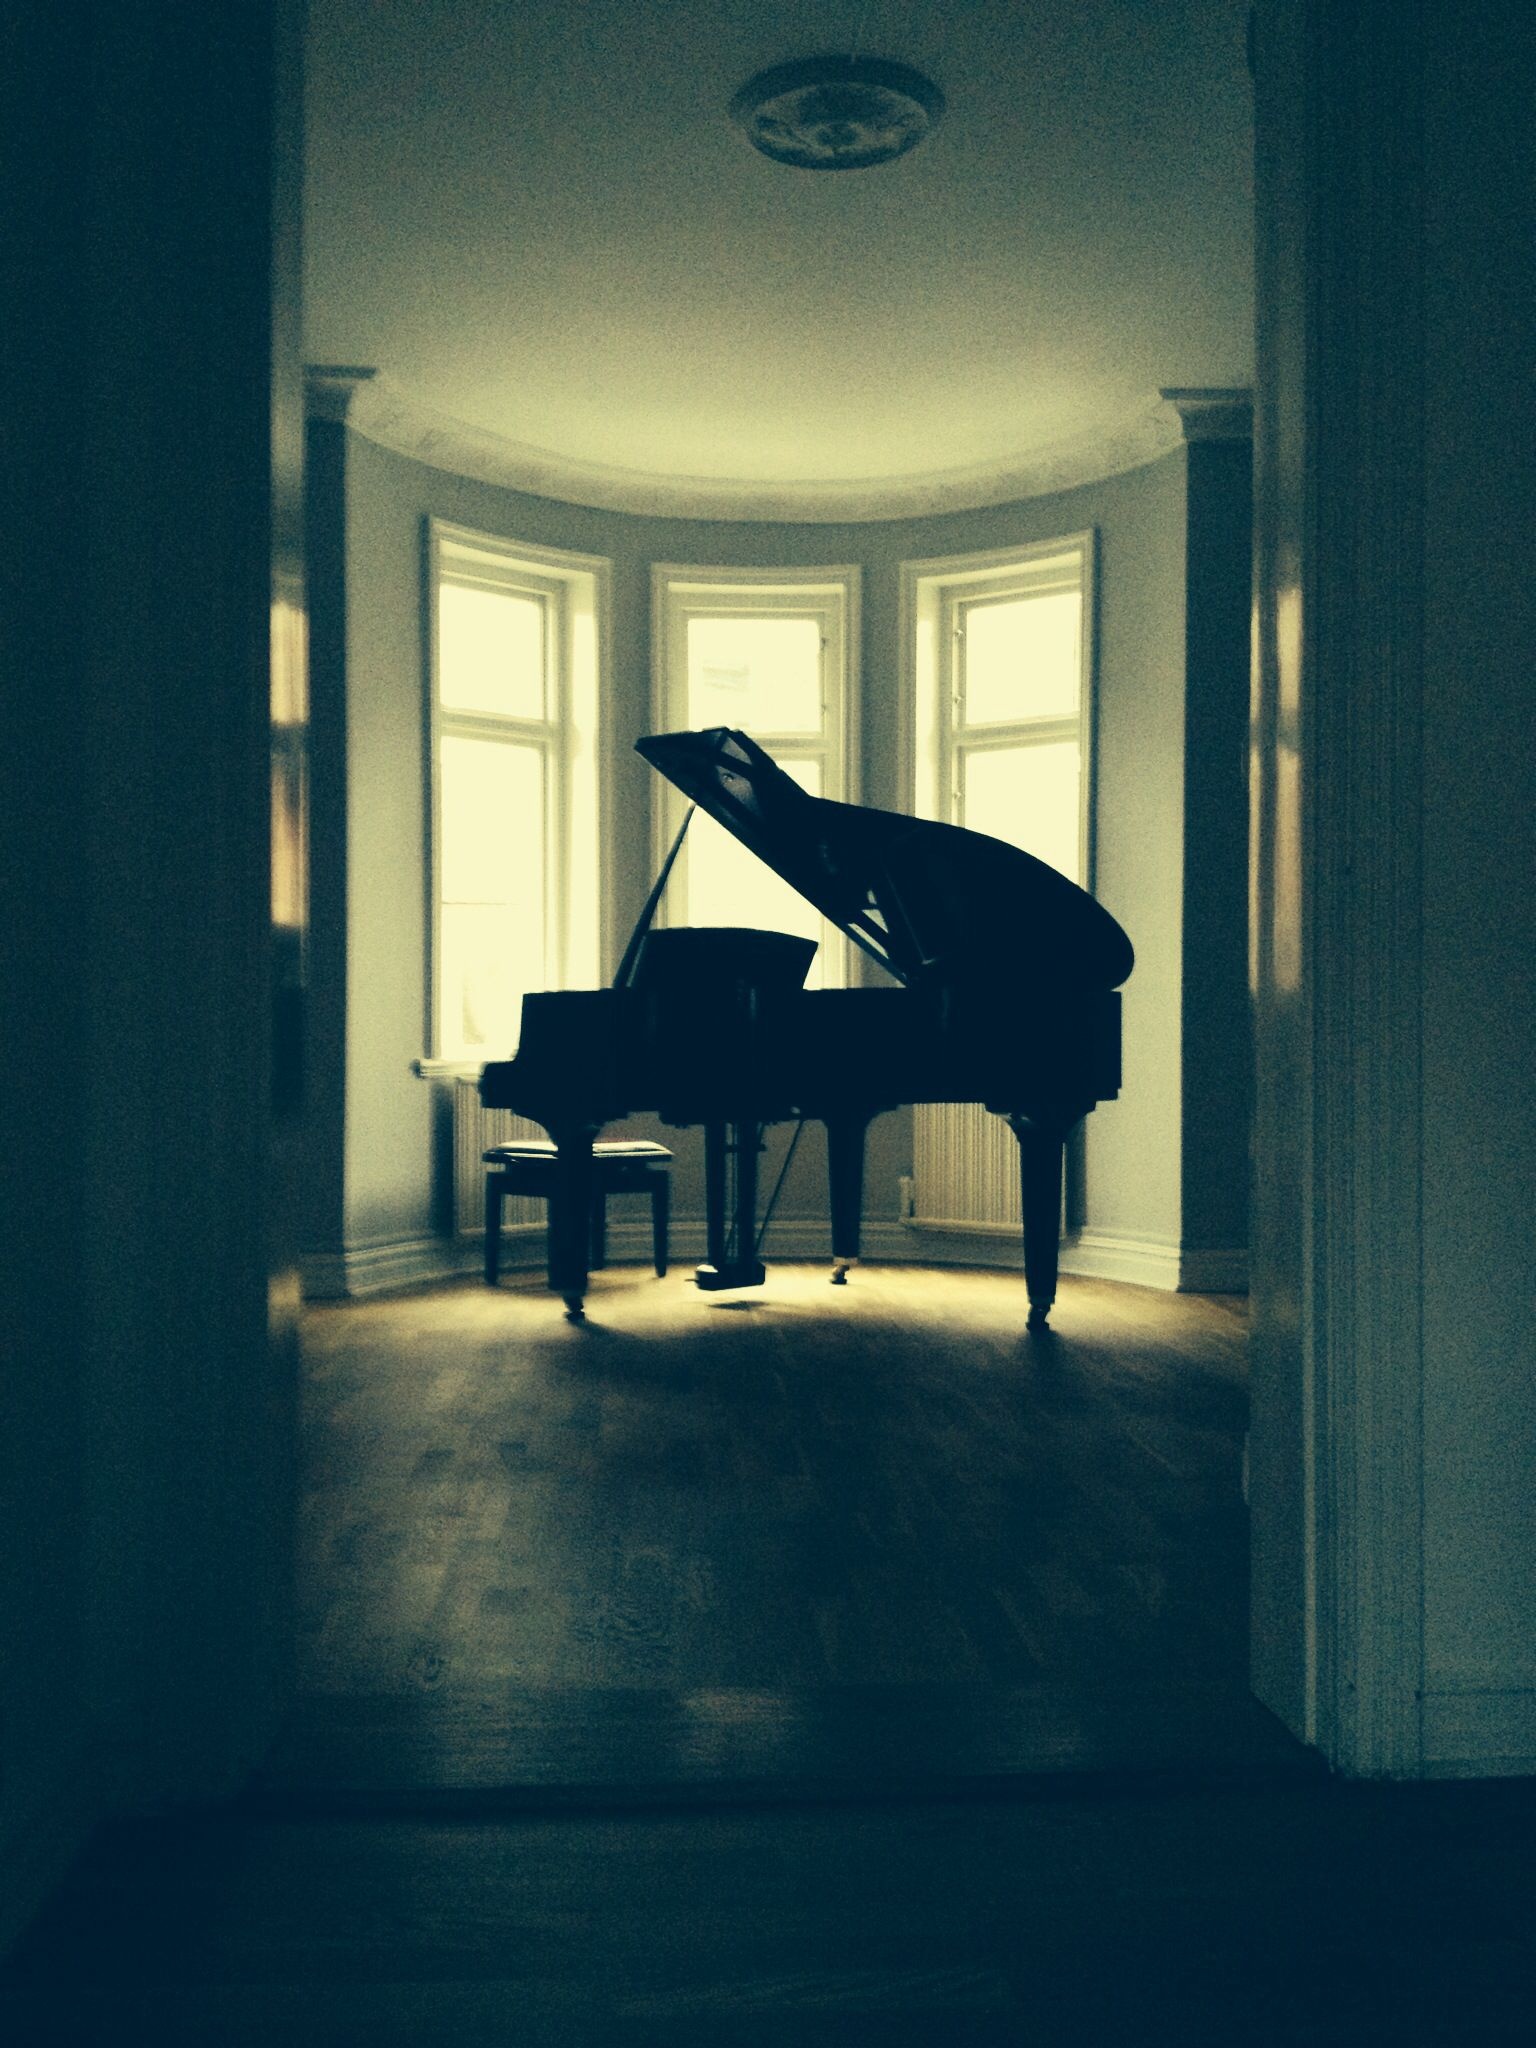 Grand Piano: Interior design, Yamaha, Musical instrument, played using a keyboard. 1540x2050 HD Wallpaper.